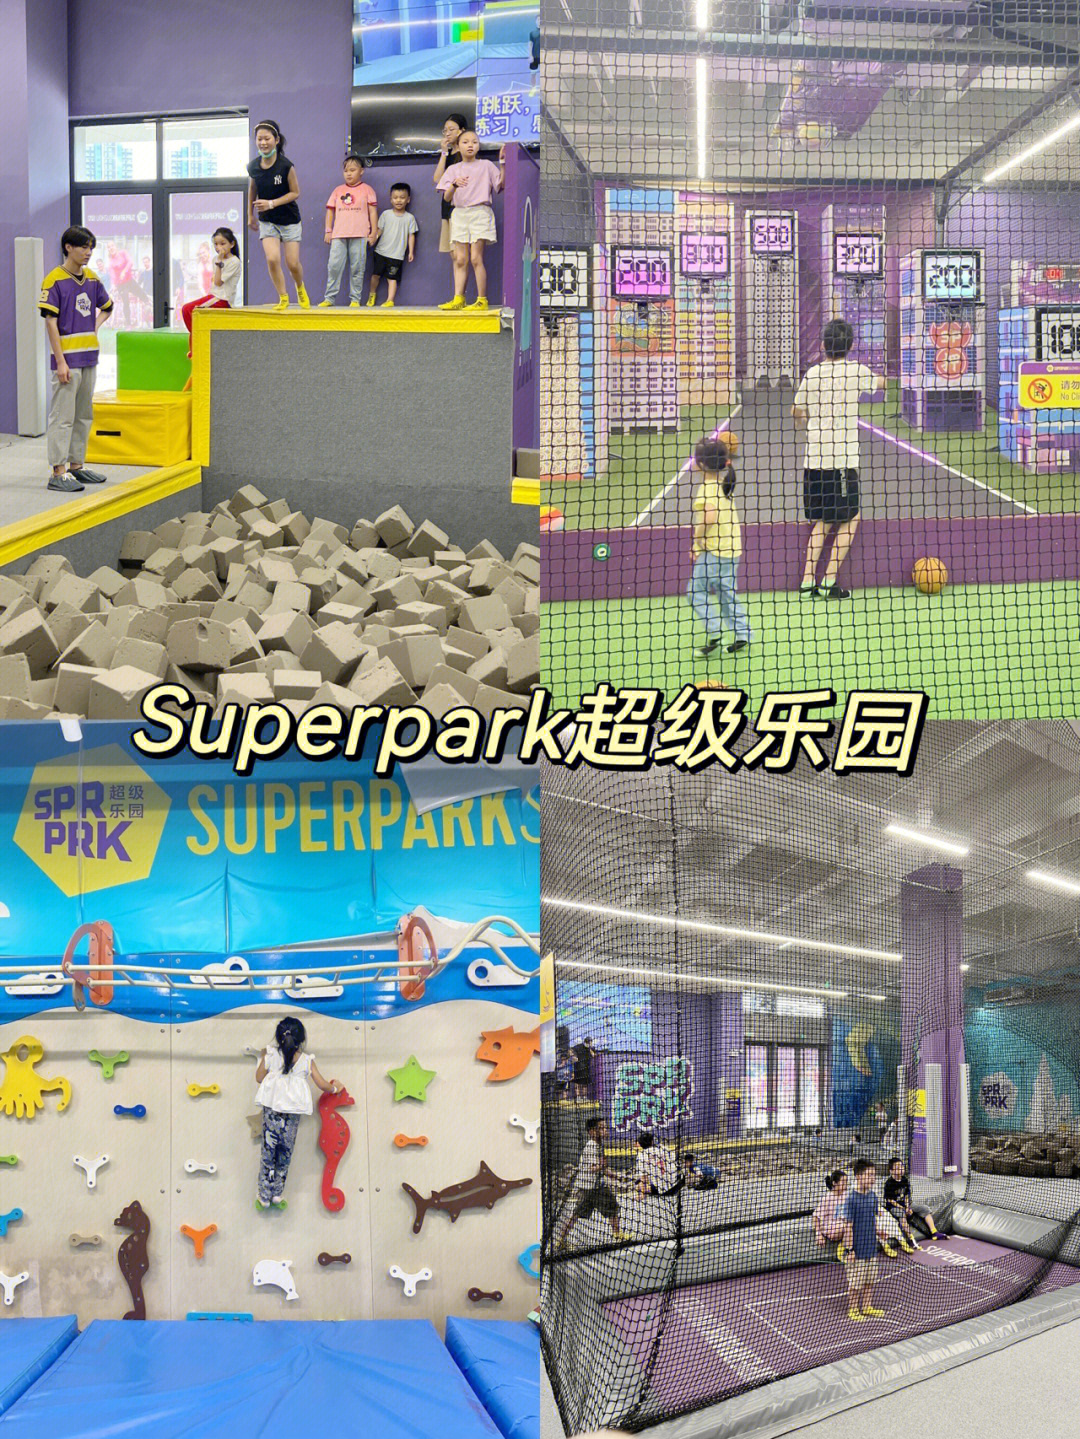 superpark超级乐园奥体中心馆73 地址:苏州园区星体街奥林匹克体育